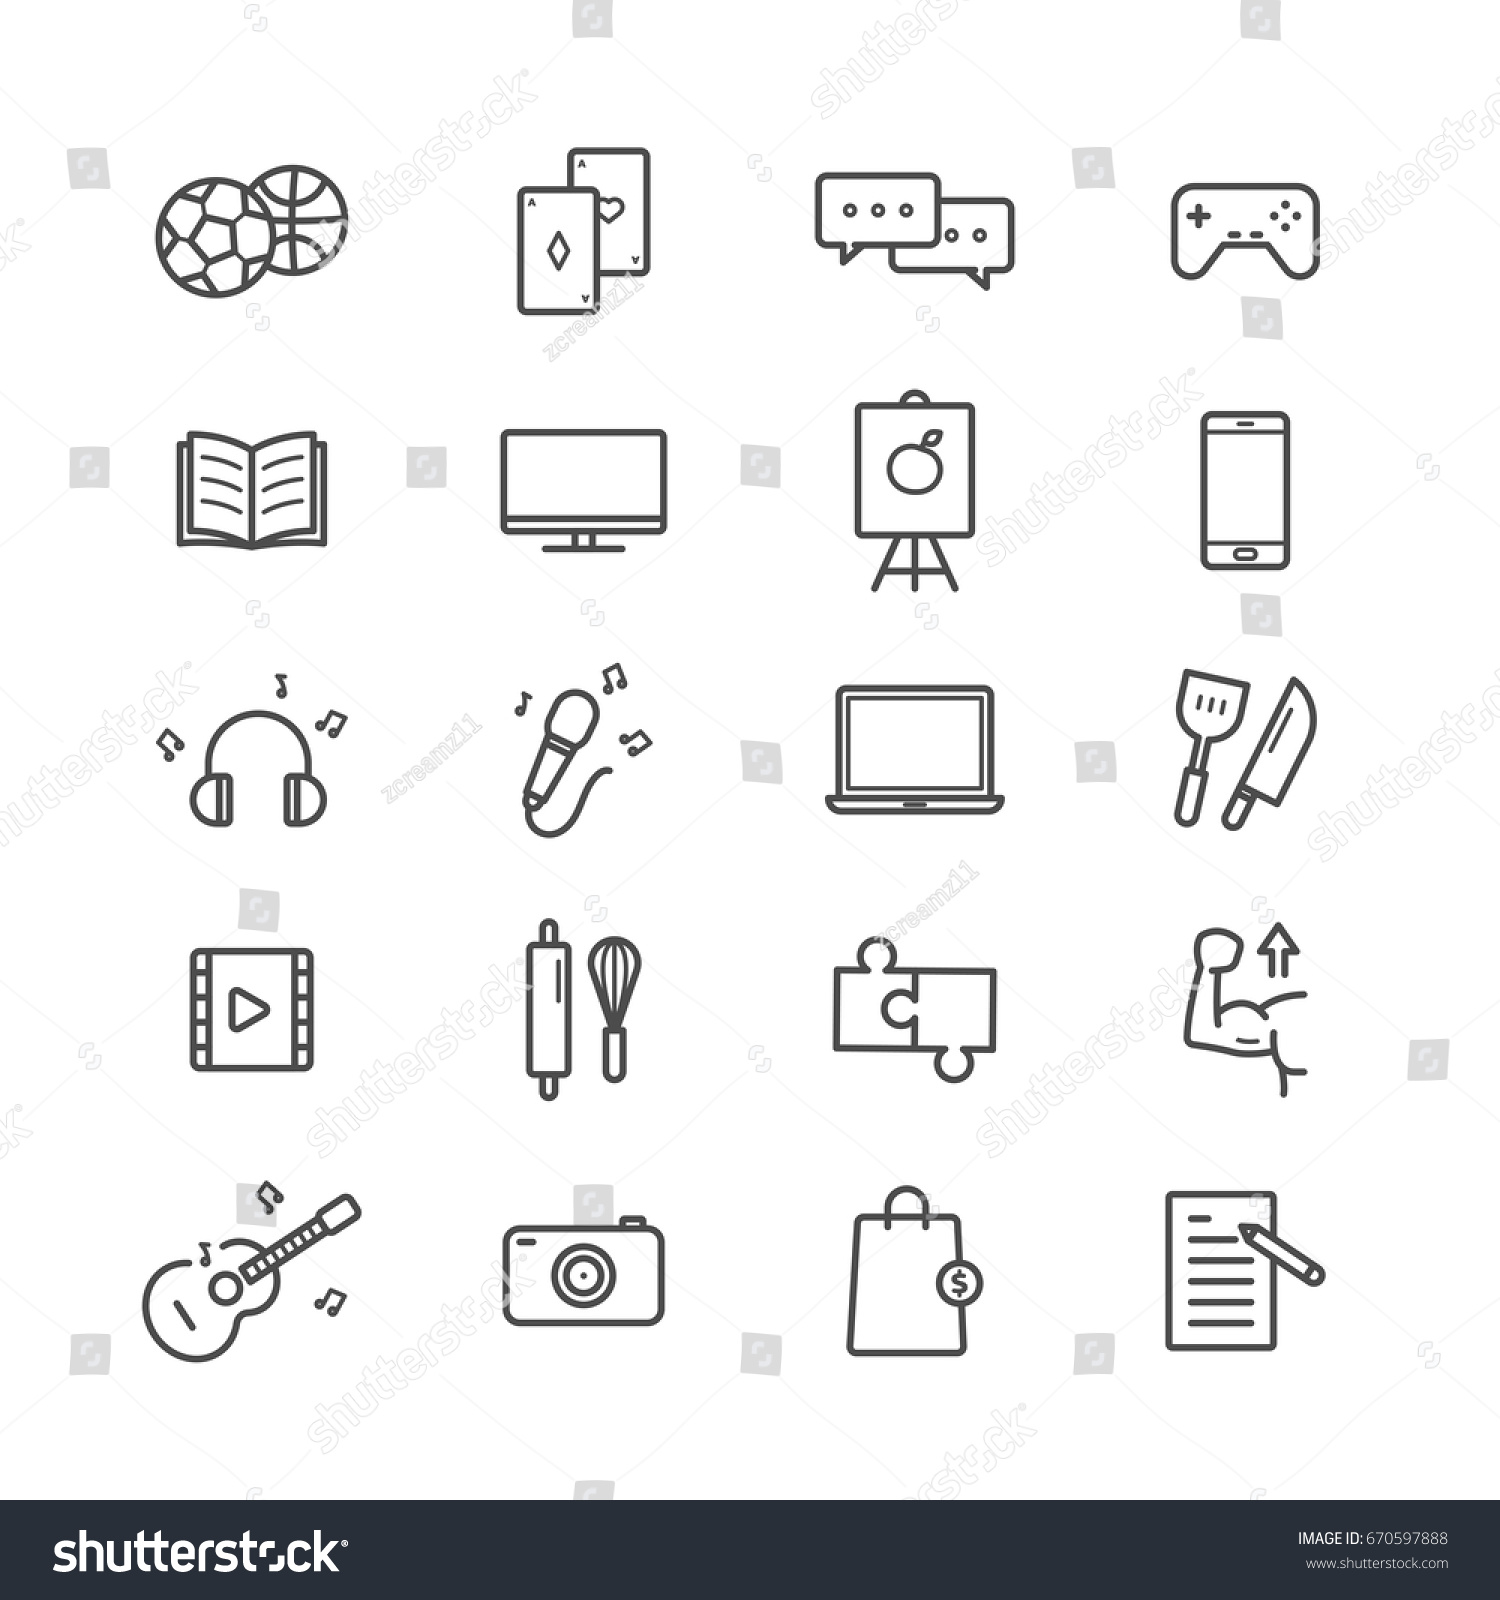 hobbies icon set on white background stock vector